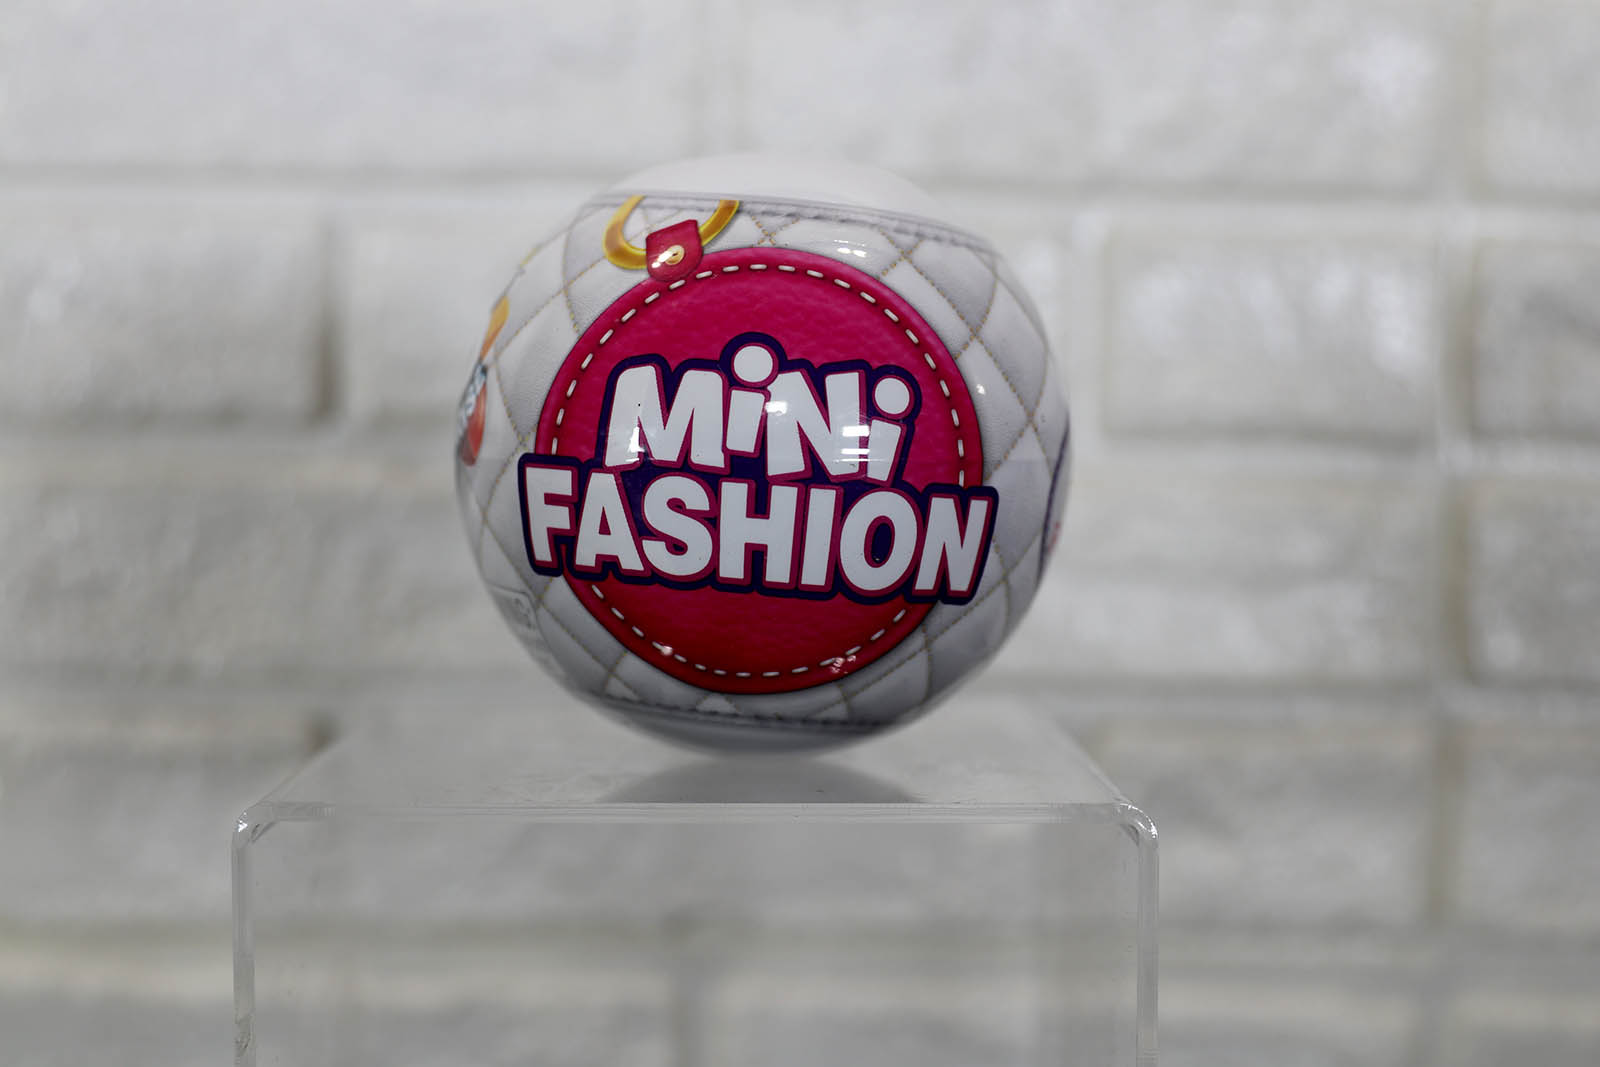 5 Surprise Mini Fashion Series 2 Collectible Capsule Toy By Zuru